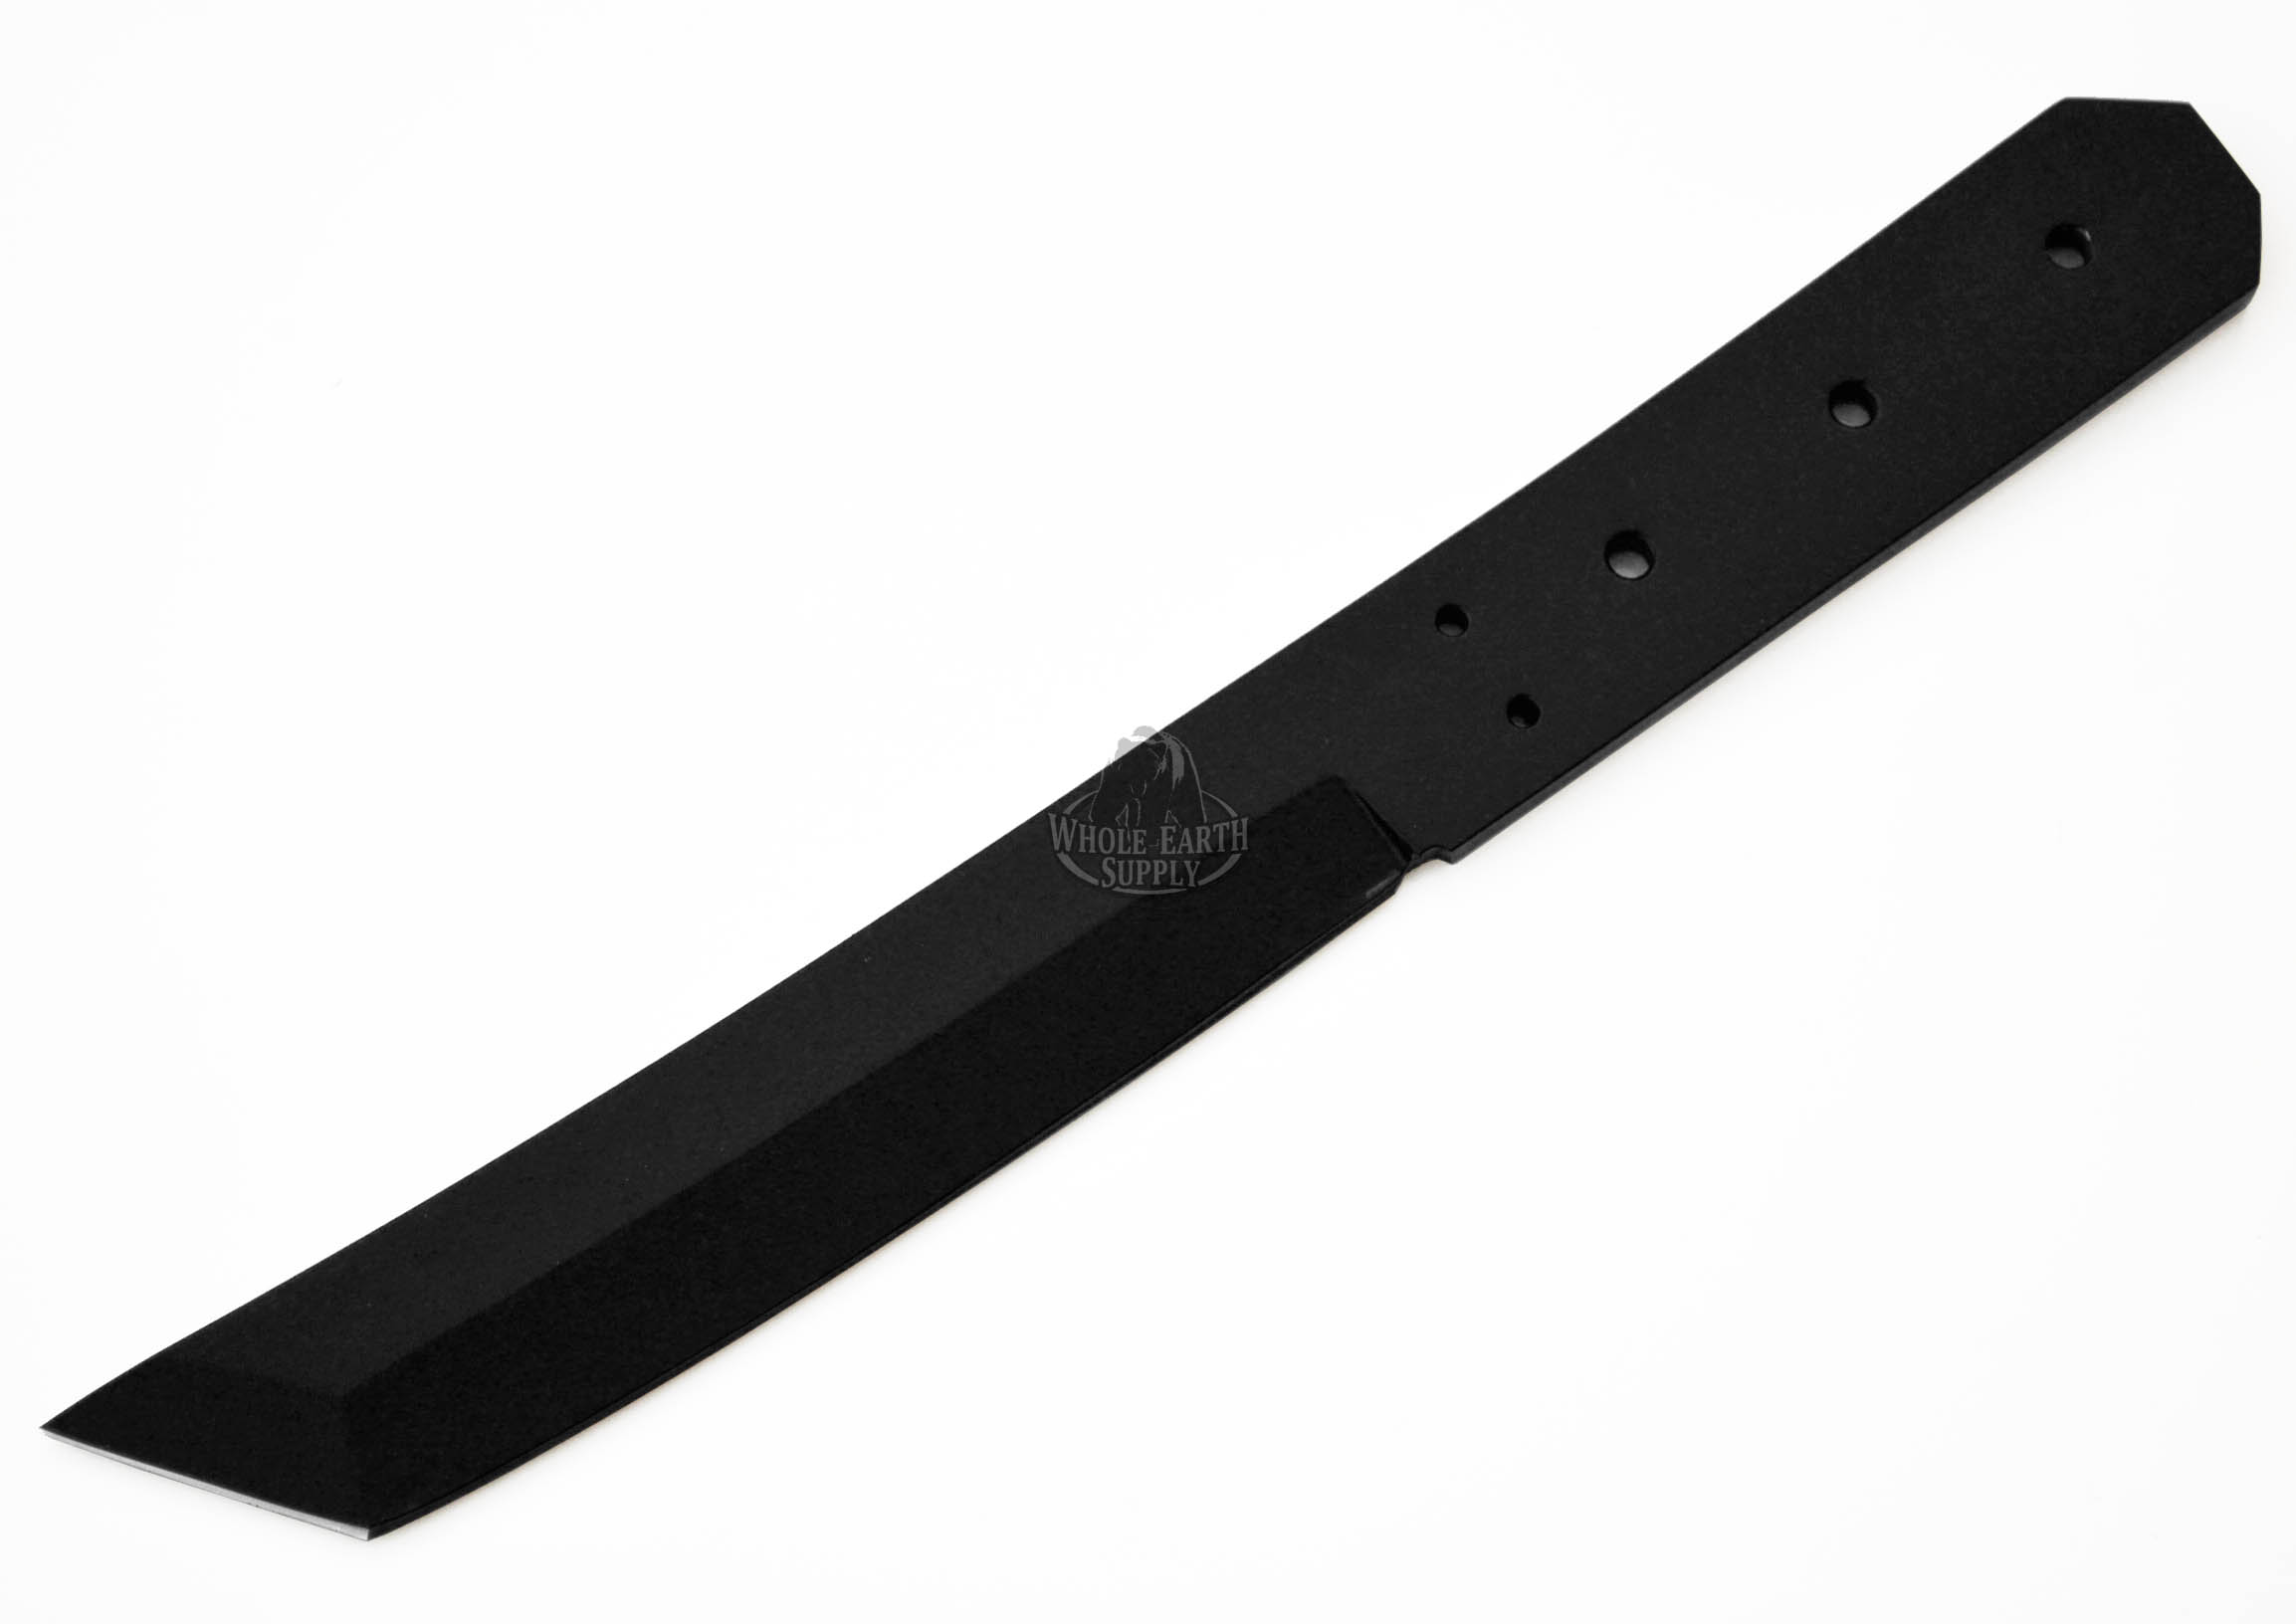 1095 High Carbon Steel Traditional Tanto Knife Blank Blade Skinning Skinner 1095HC Black Powder Coated